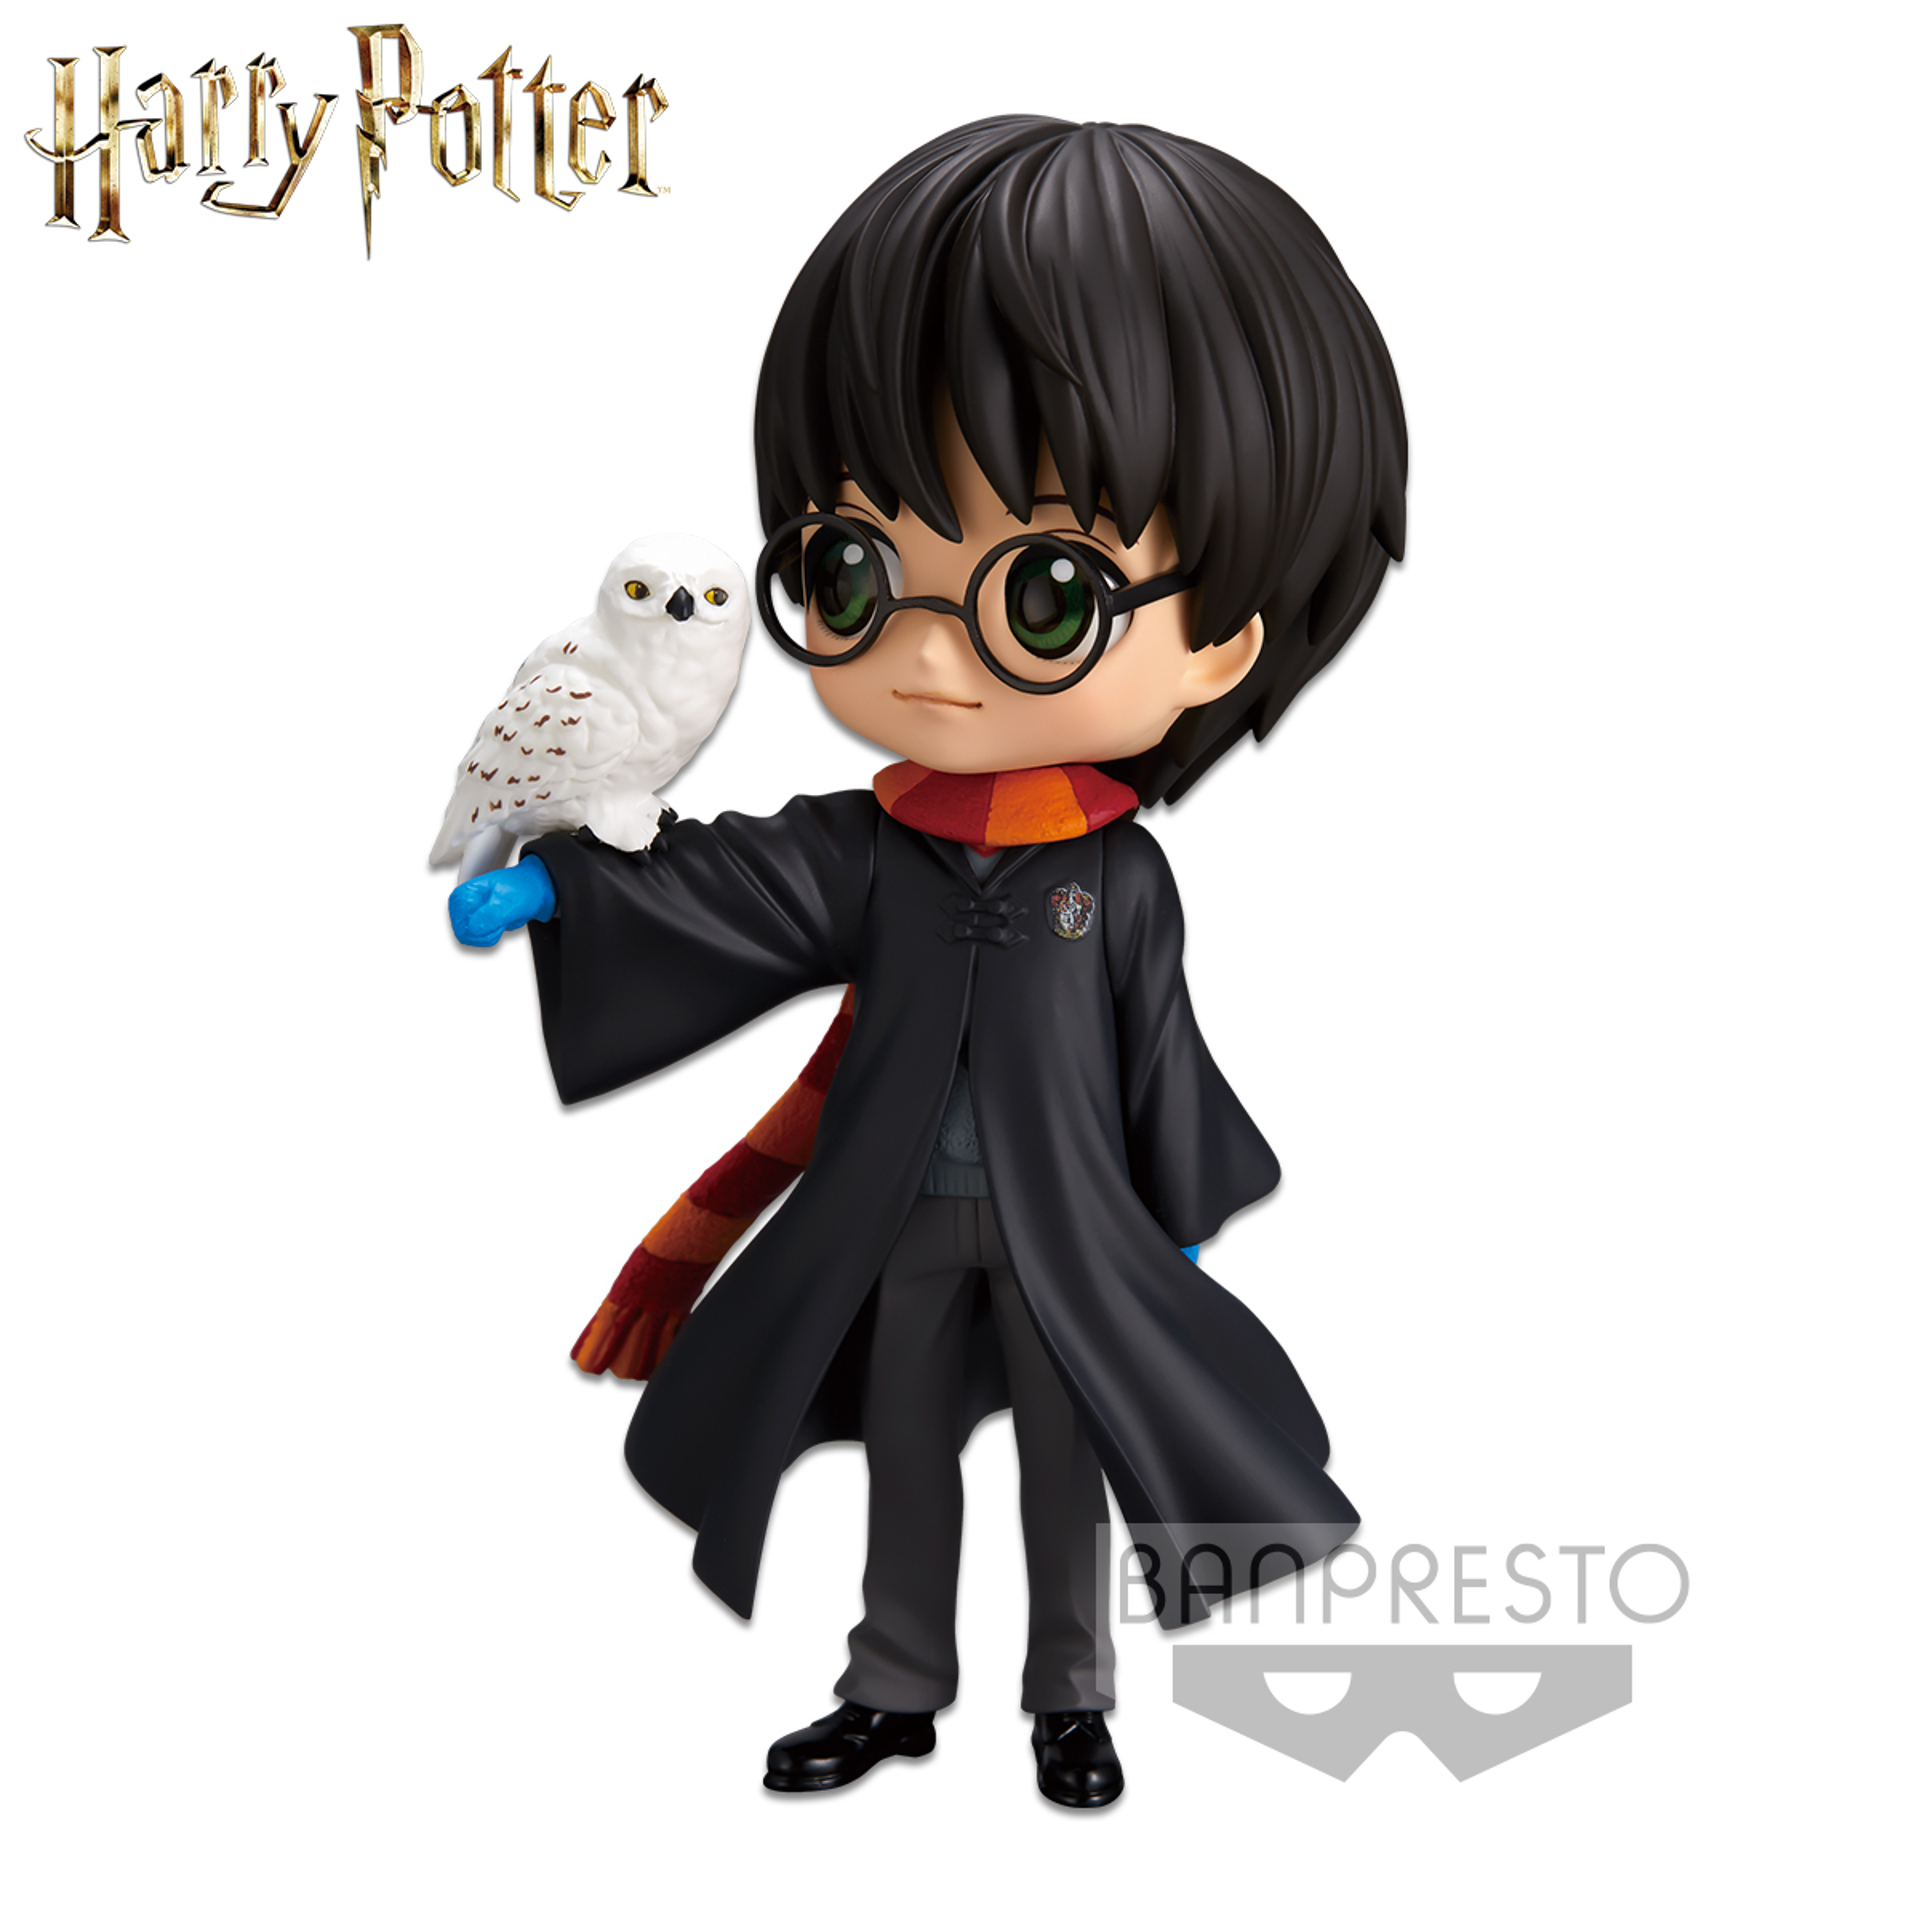 Harry Potter - Q Posket Harry Potter II ver.A Figure 14cm